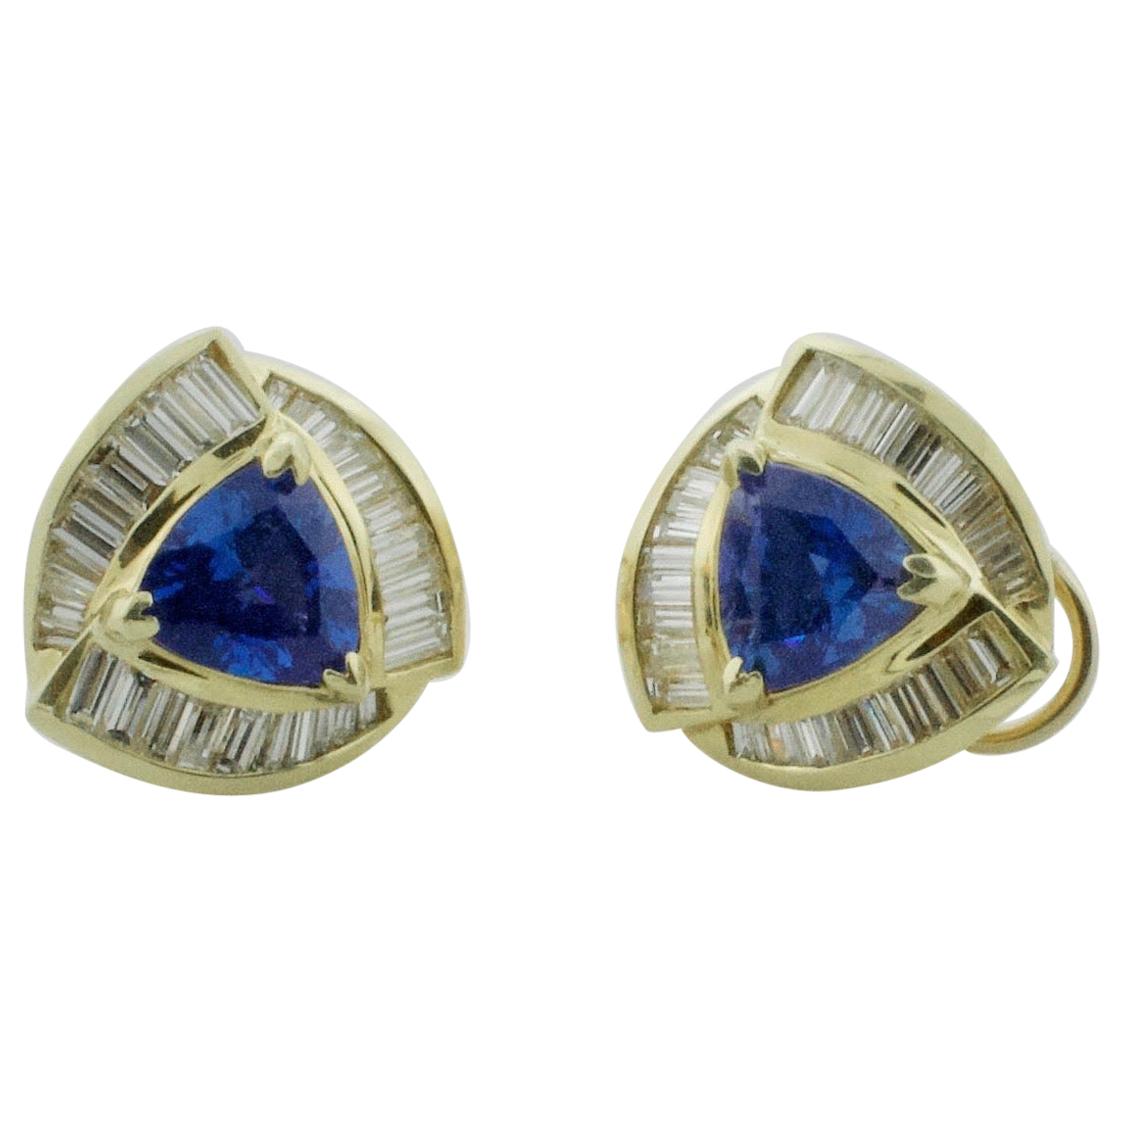 Trillion Cut Sapphire and Diamond Earrings in 18 Karat